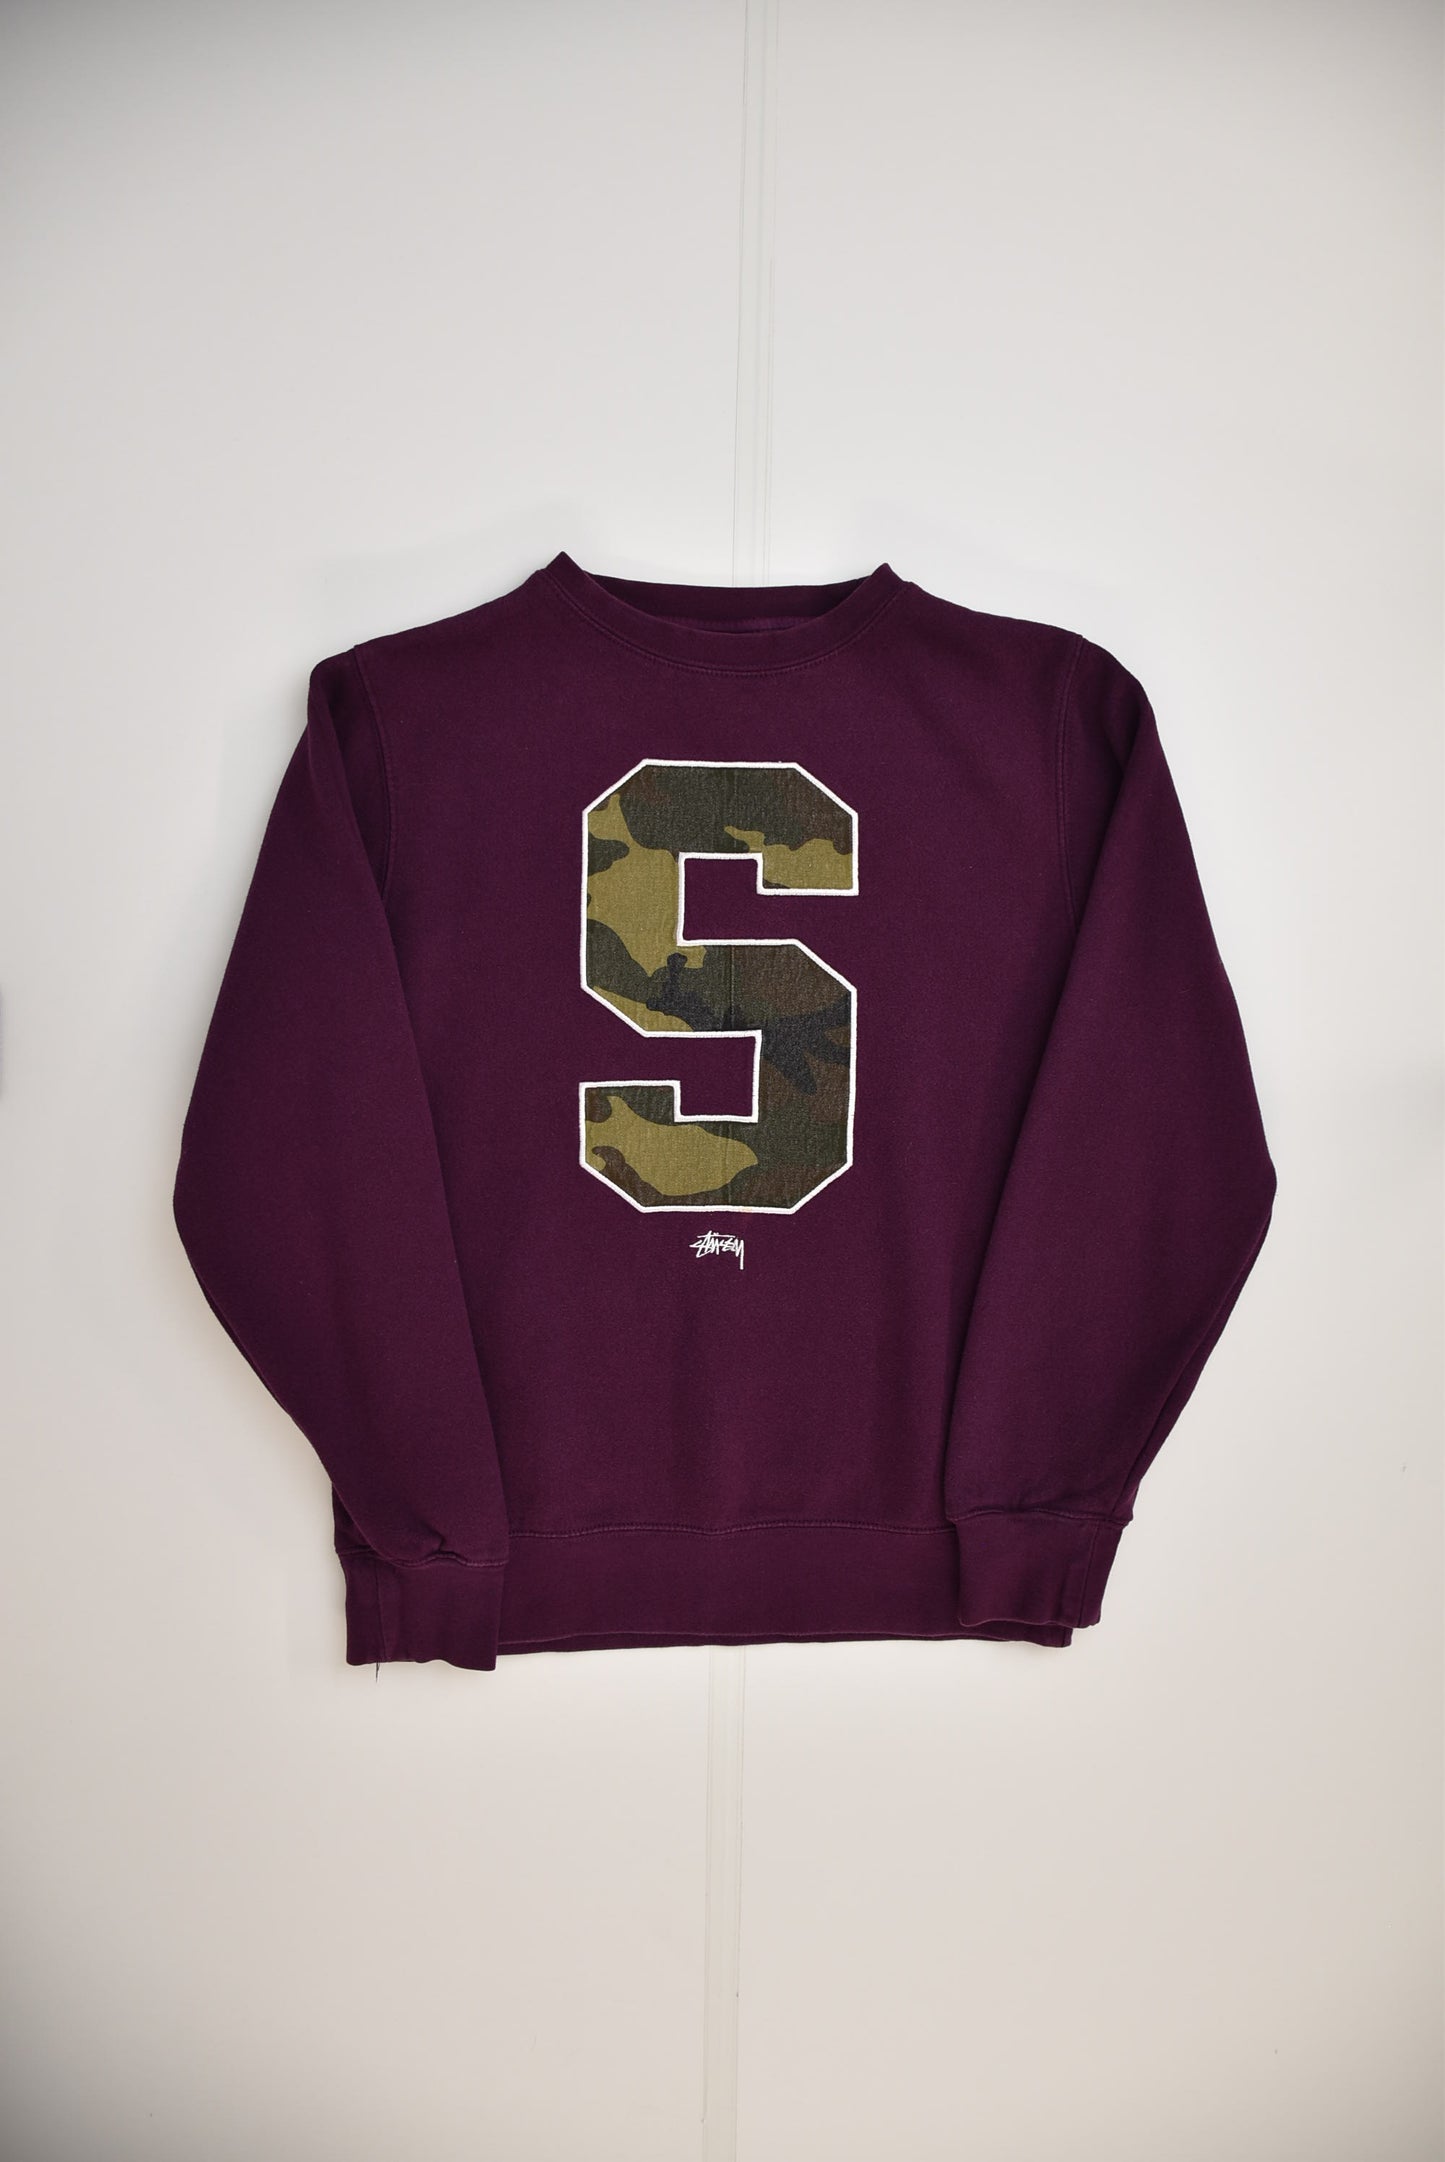 Stussy Sweatshirt (S)